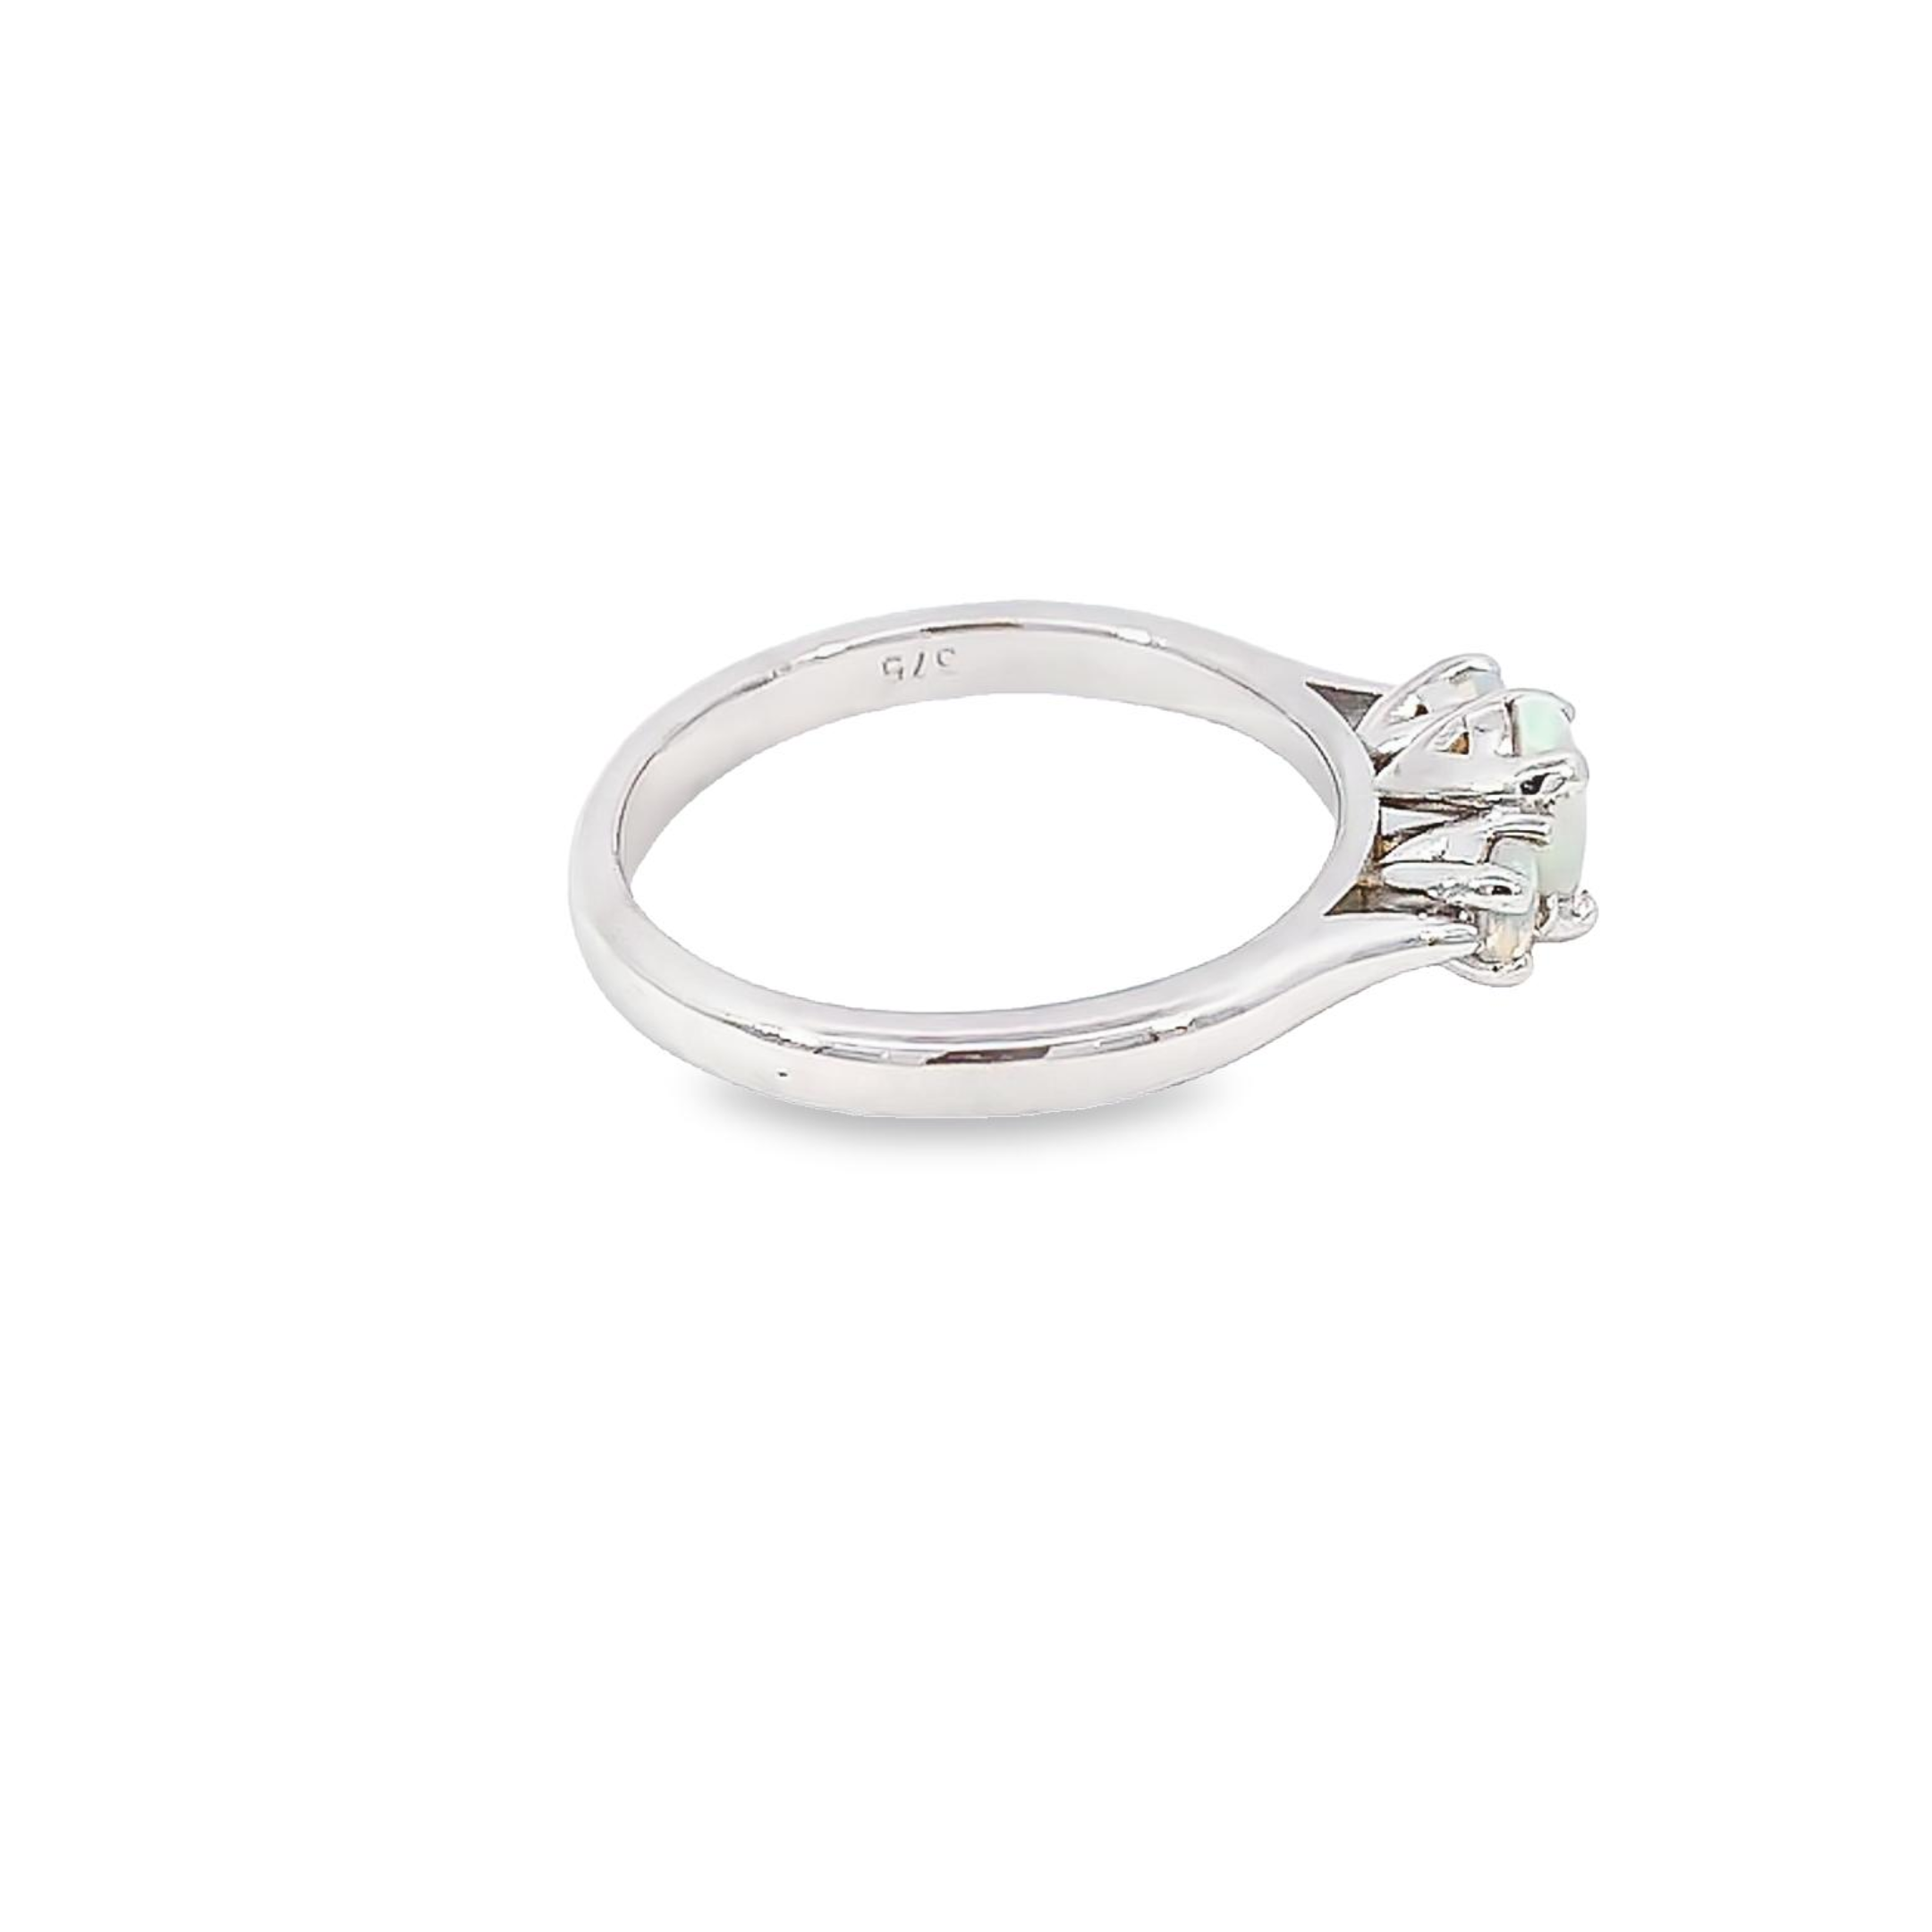 9kt White Gold 3 stone trilogy Opal ring 0.43ct - Masterpiece Jewellery Opal & Gems Sydney Australia | Online Shop